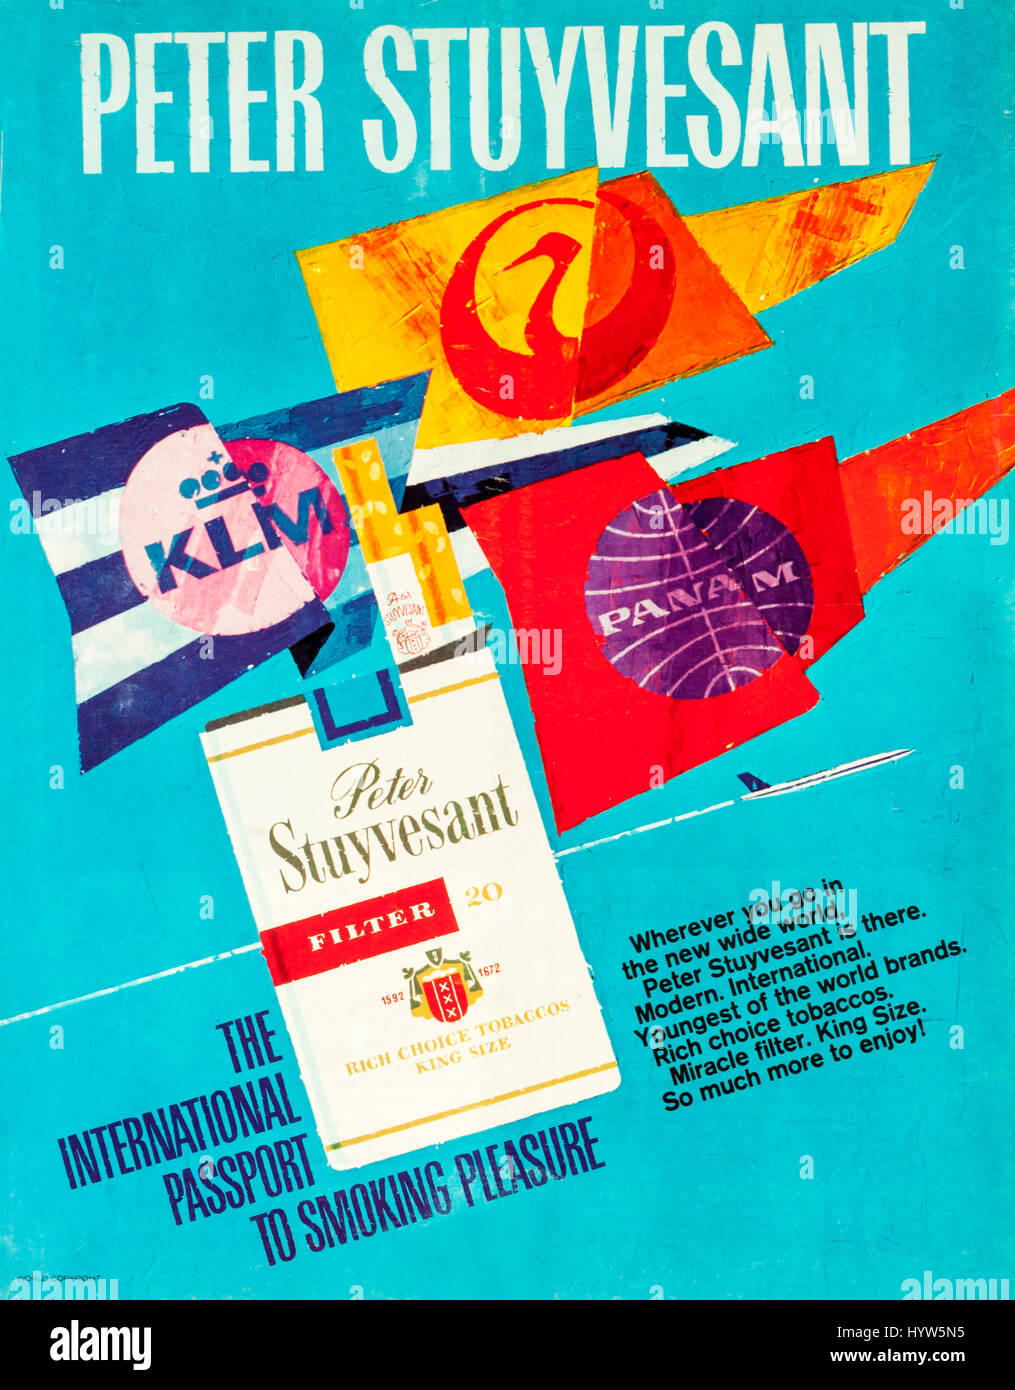 1970s magazine advert advertising Peter Stuyvesant cigarettes. Stock Photo